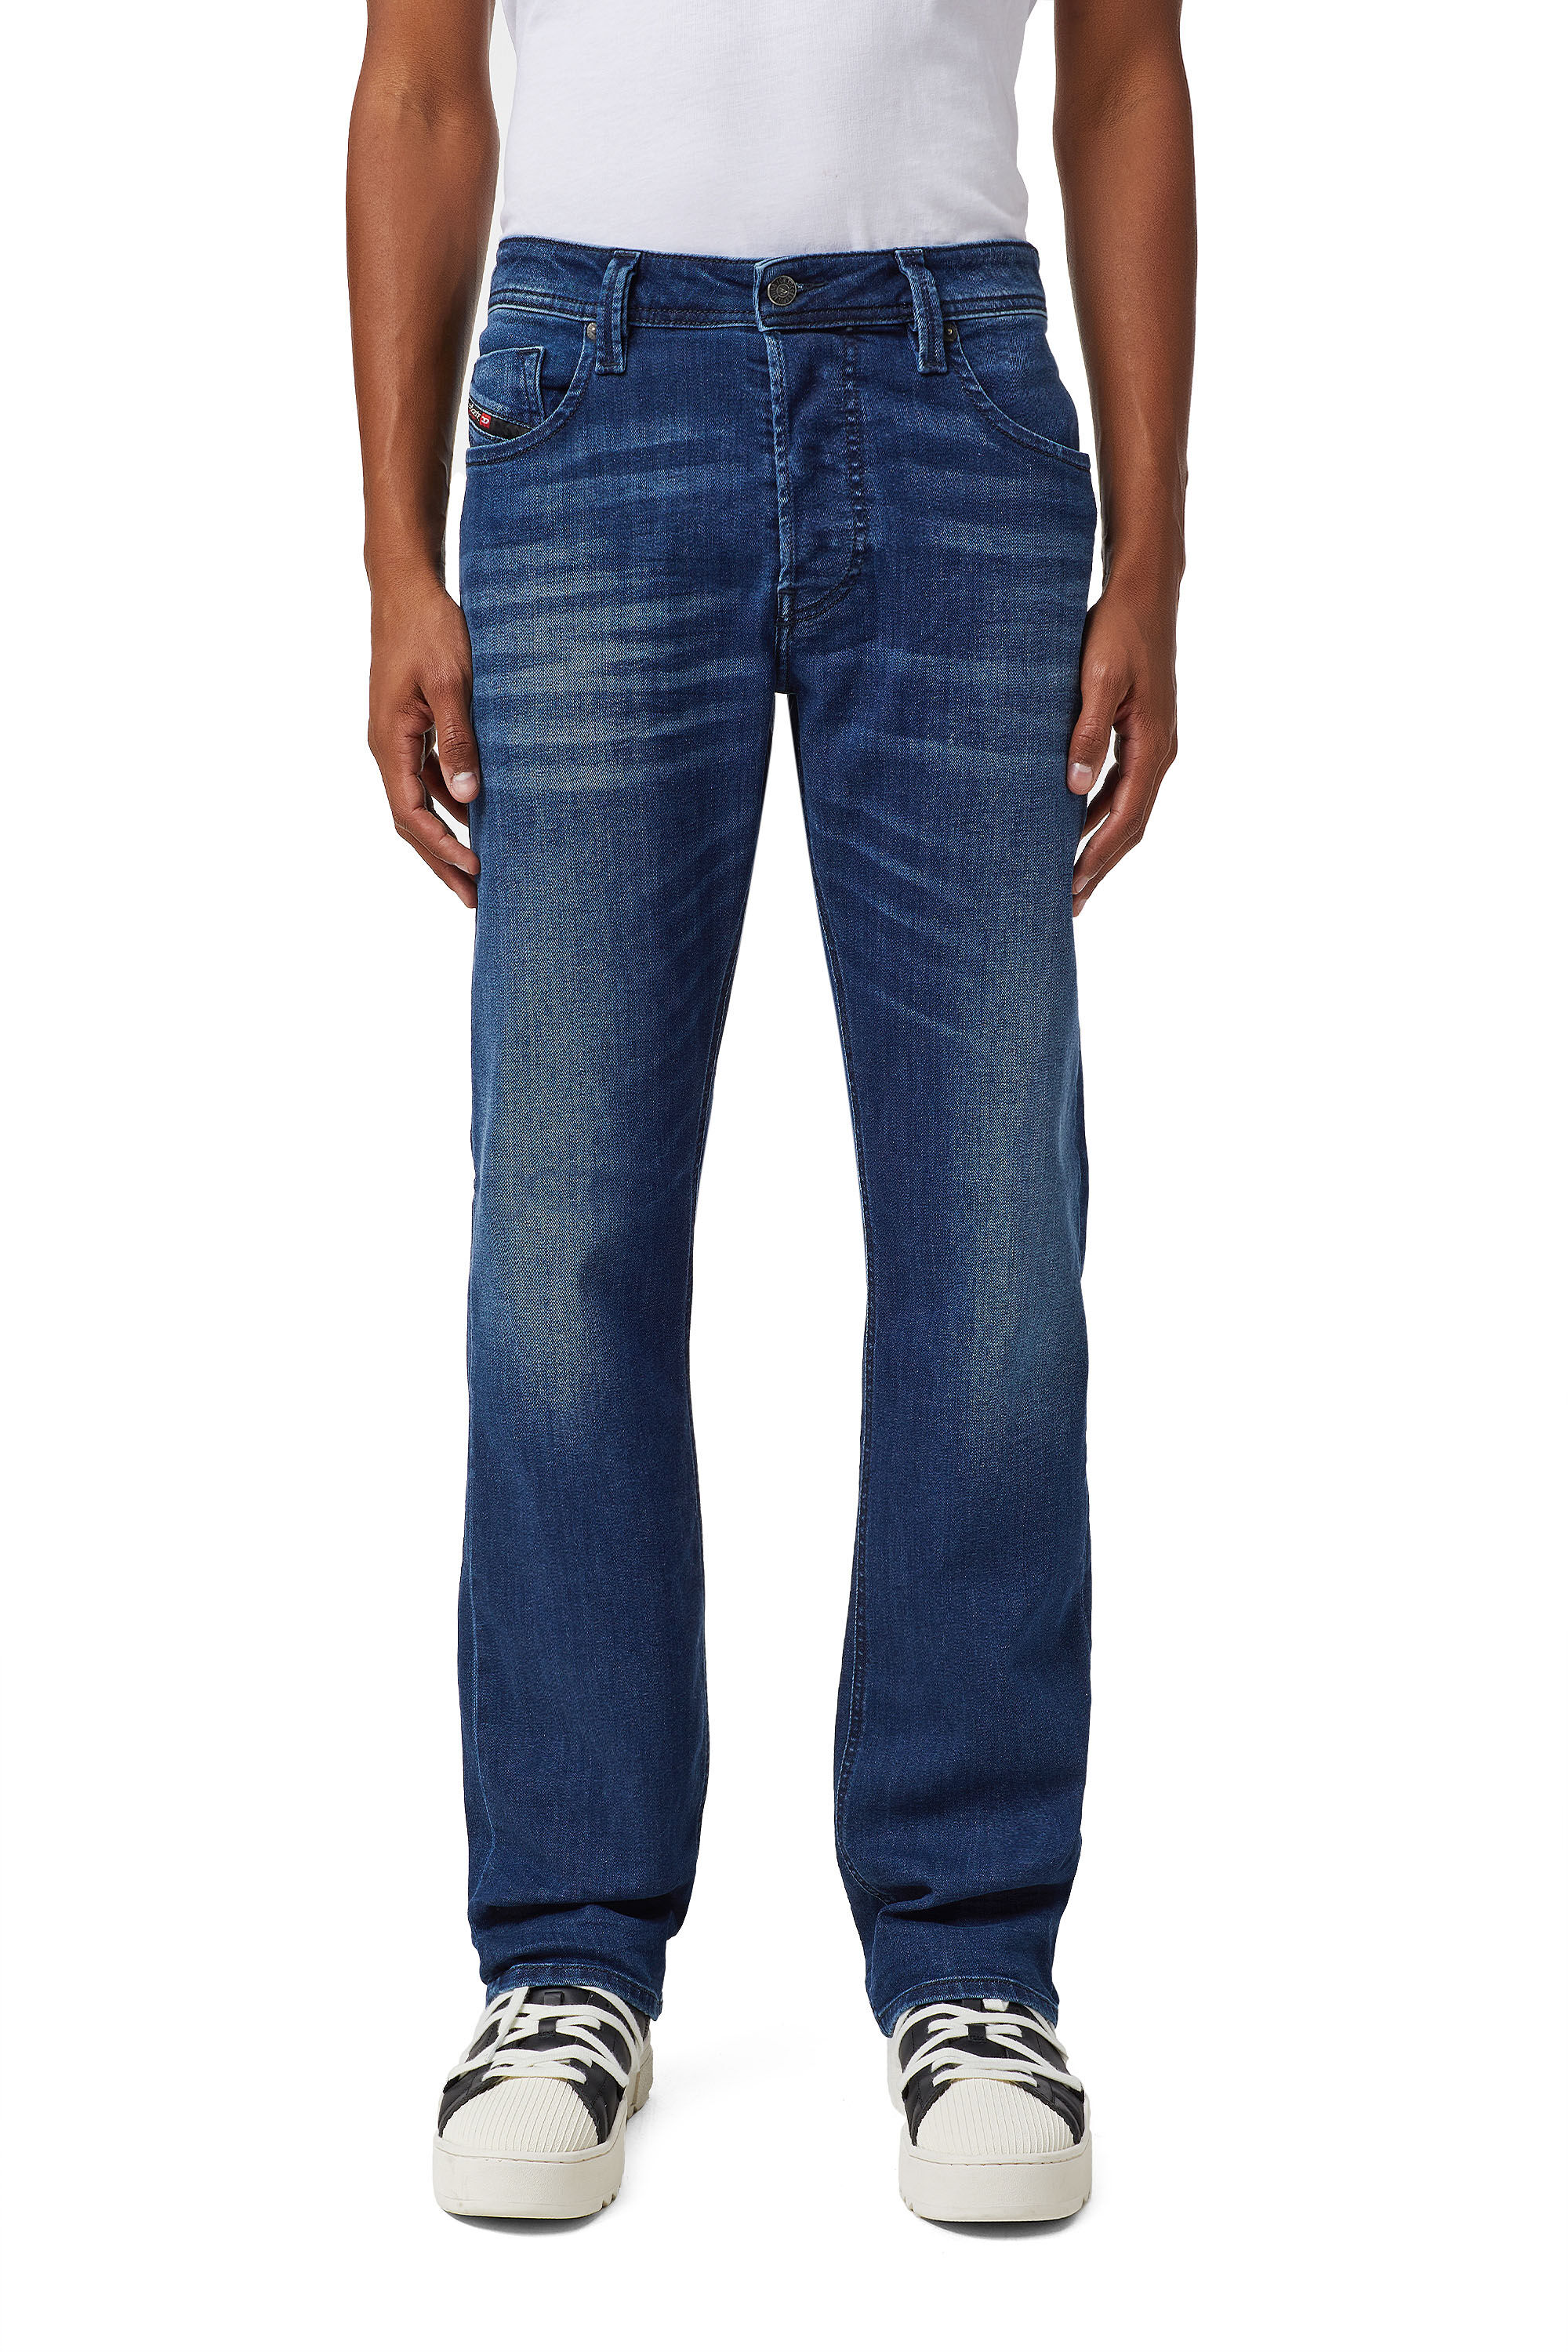 Larkee Straight Jeans 069SF: Dark Blue Treated, Stretch